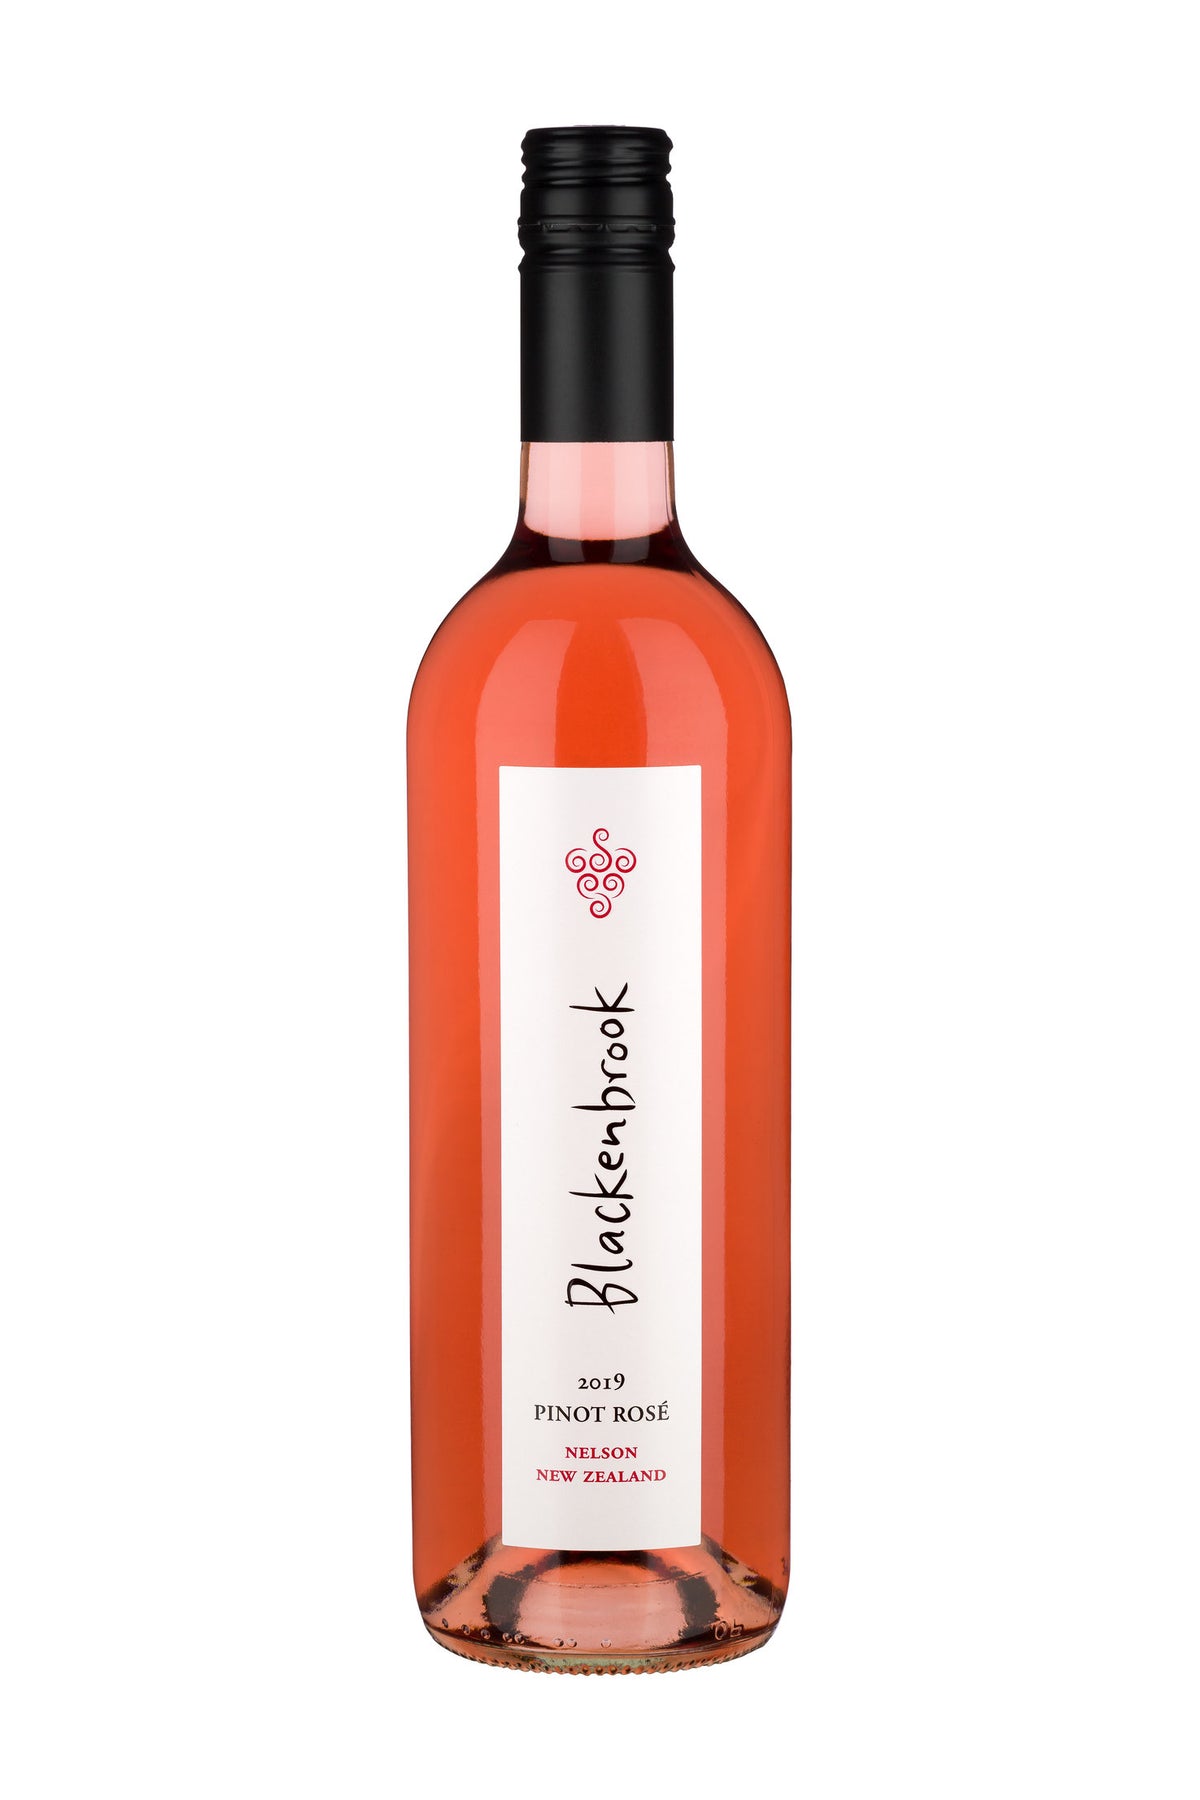 Blackenbrook Pinot Rosé 2019